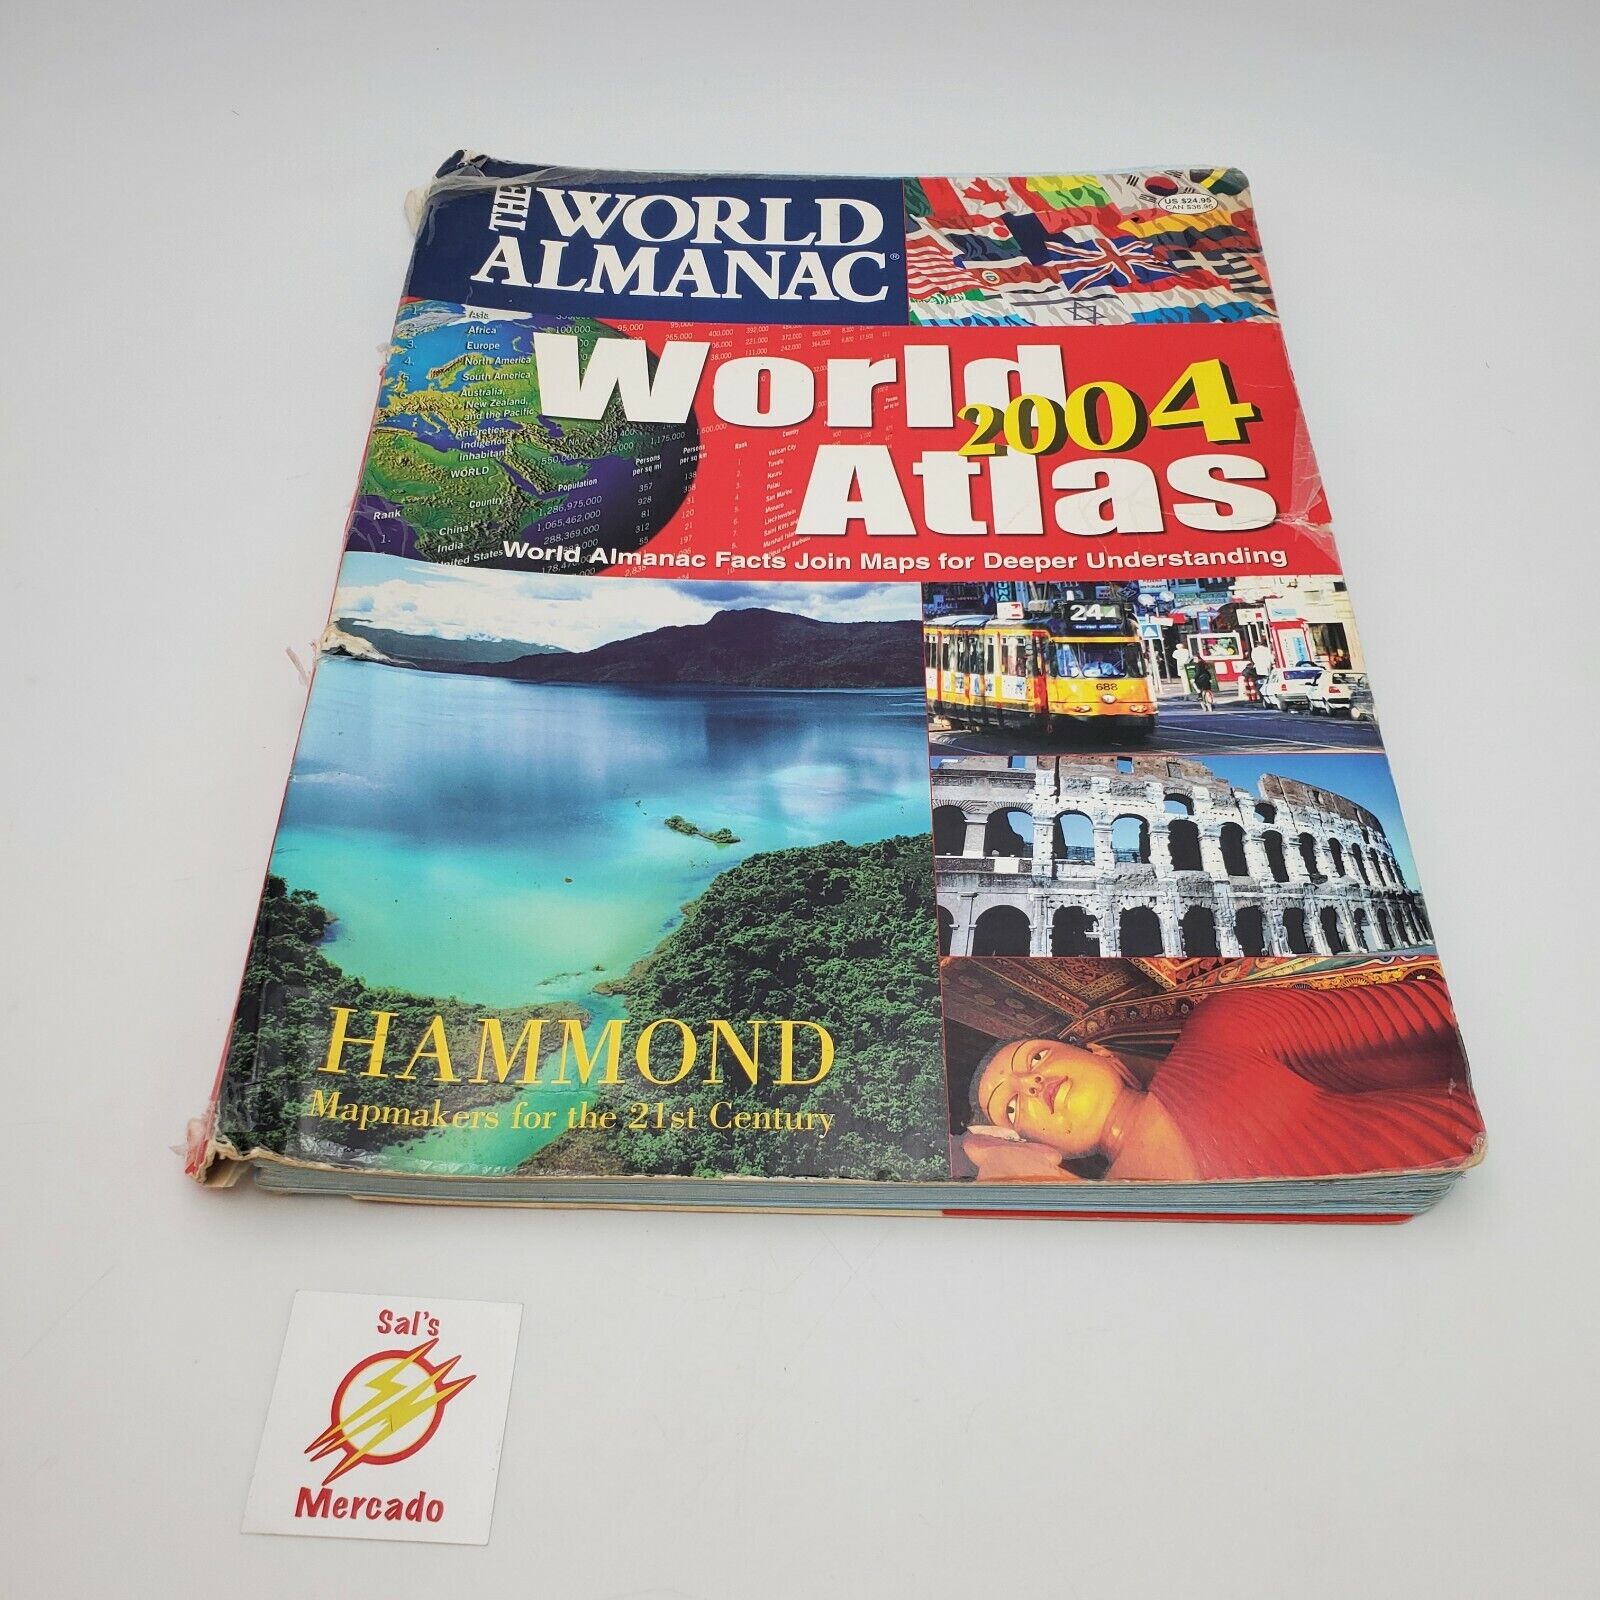 The World Almanac World Atlas 2004 Facts join Maps for Deeper Understanding